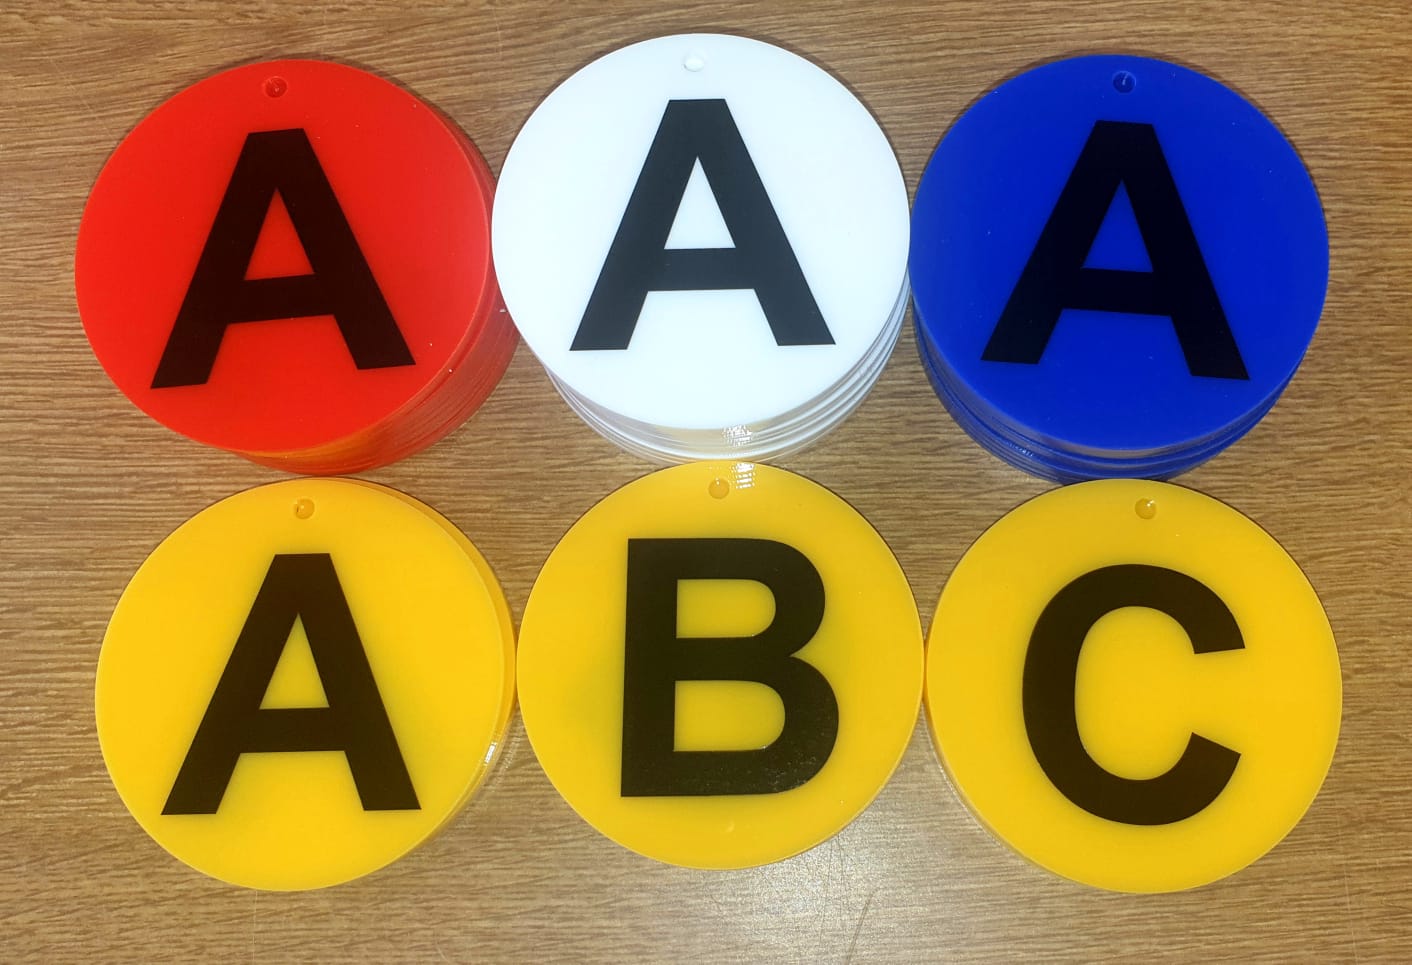 lettered plastic discs